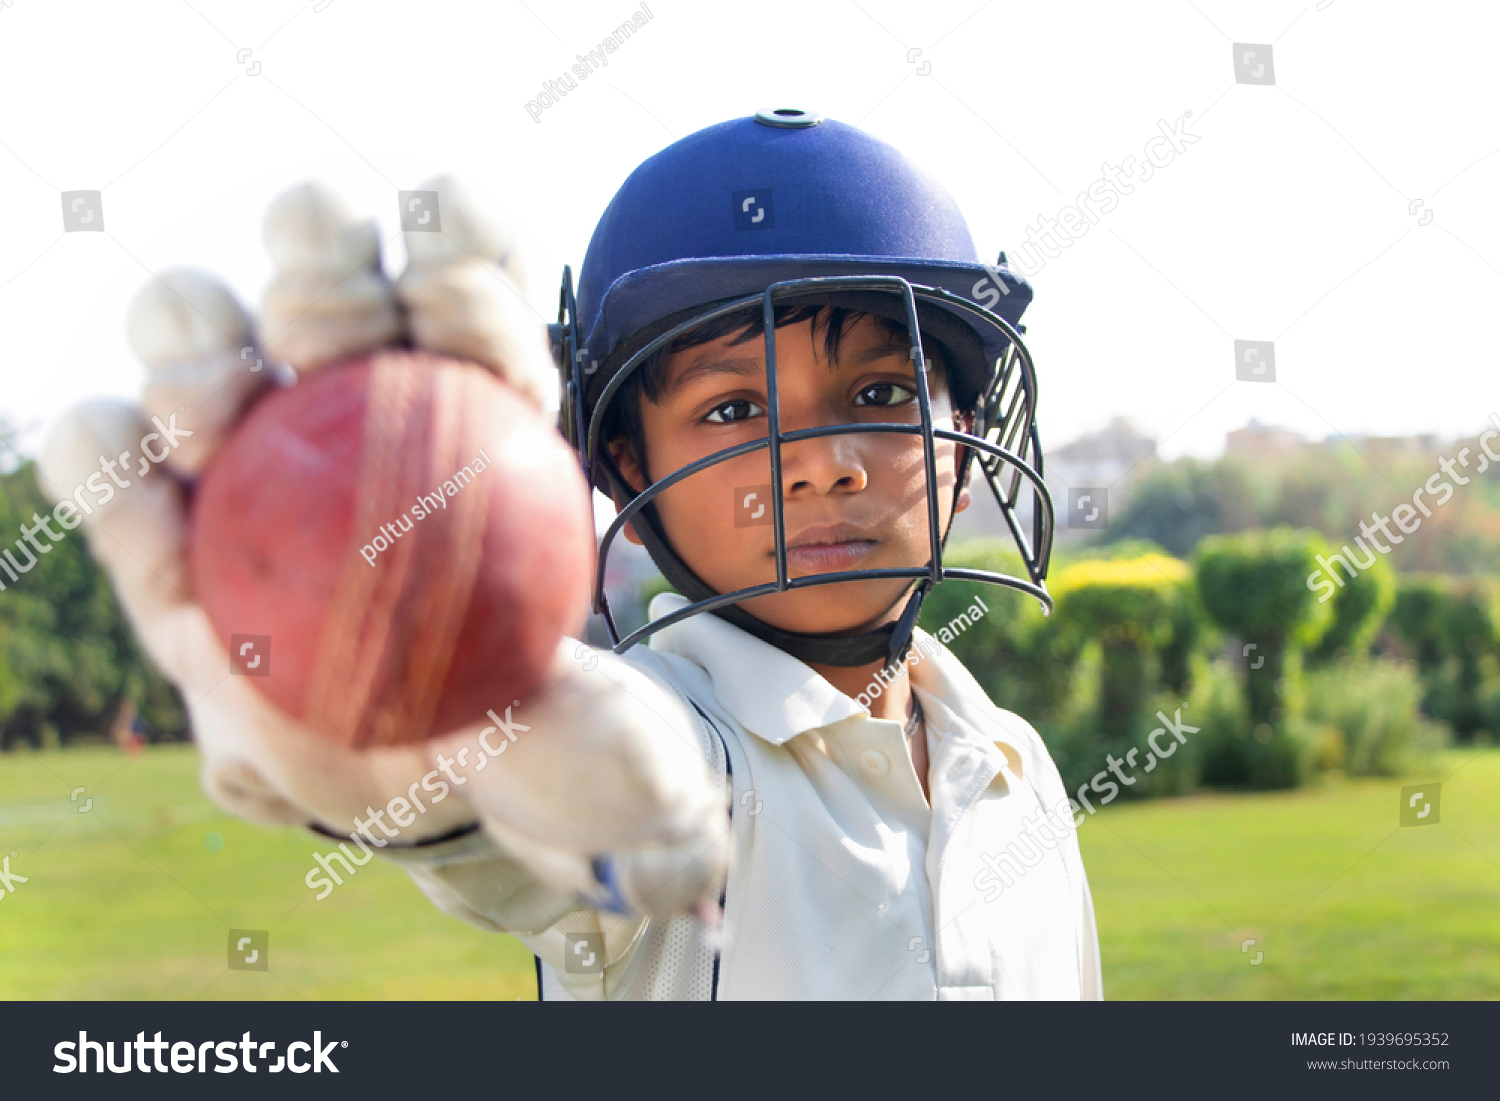 Portrait of boy wearing cricket helmet and Showing cricket ball #1939695352